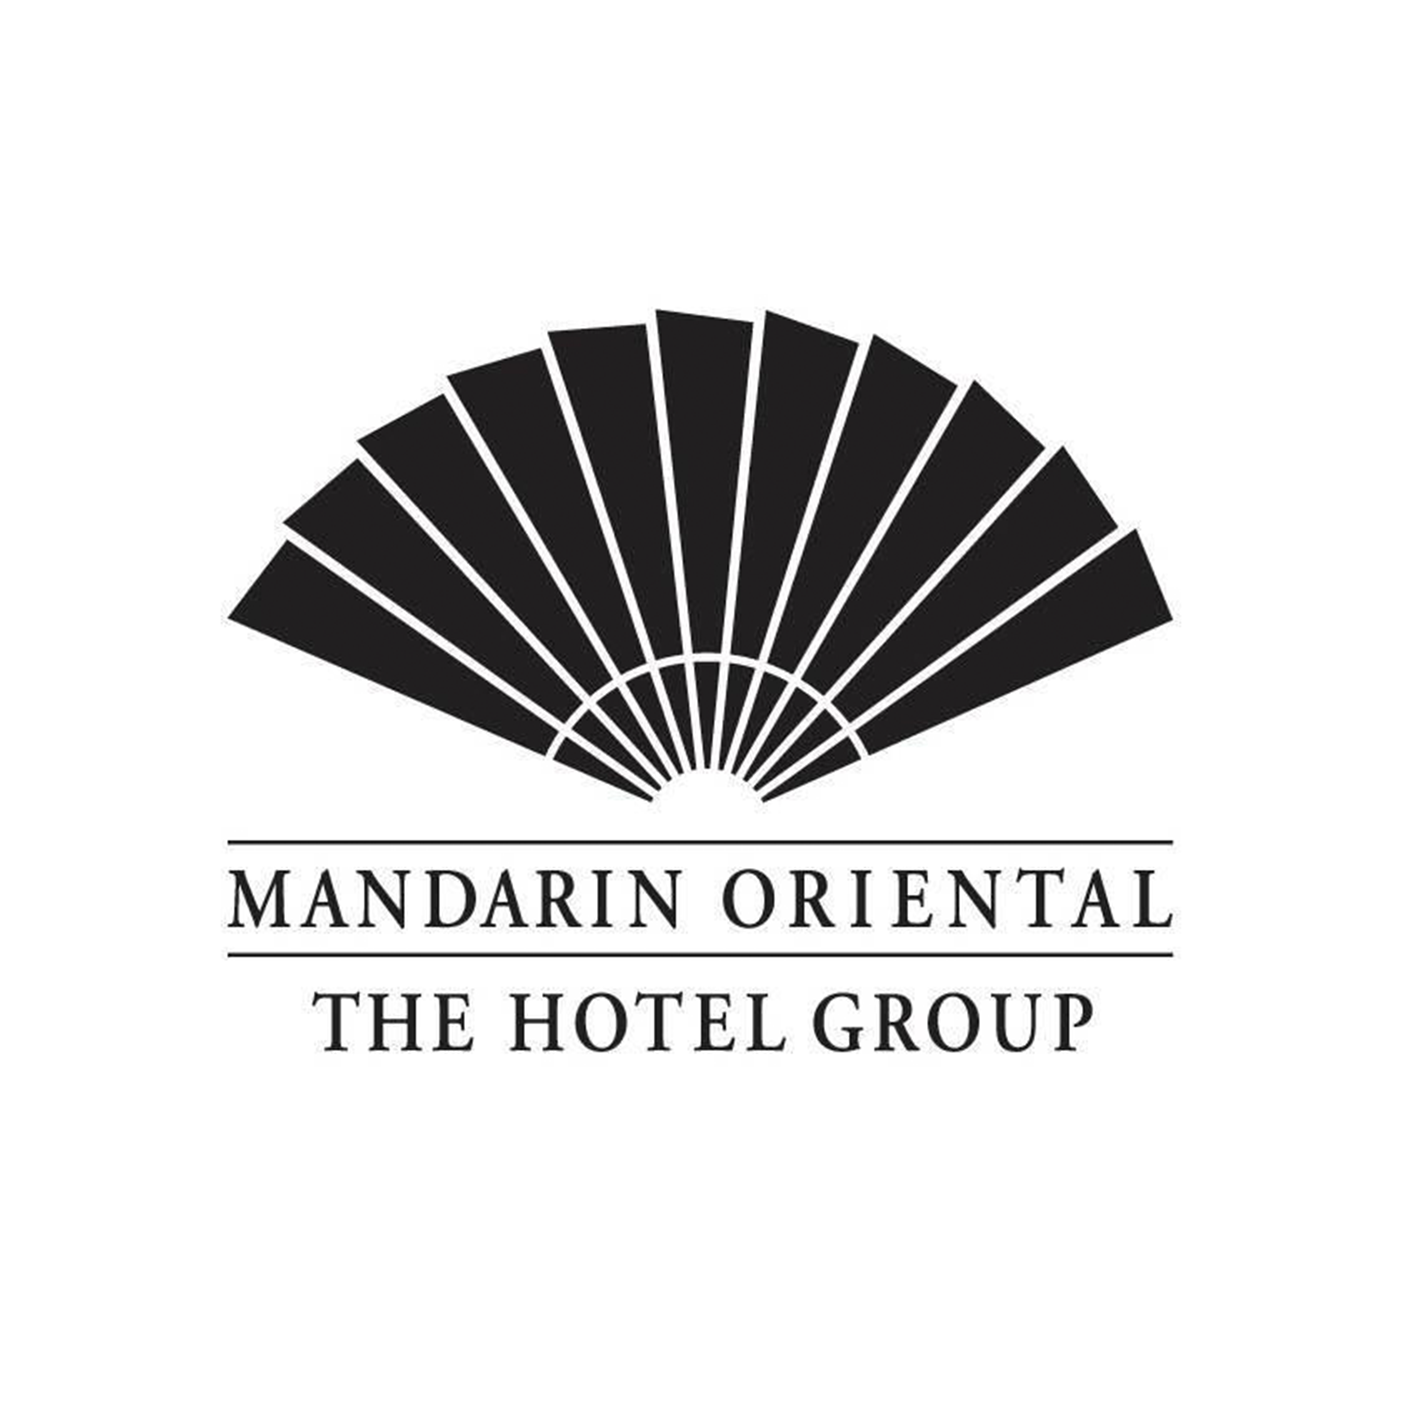 Mandarin Oriental Hotels.png